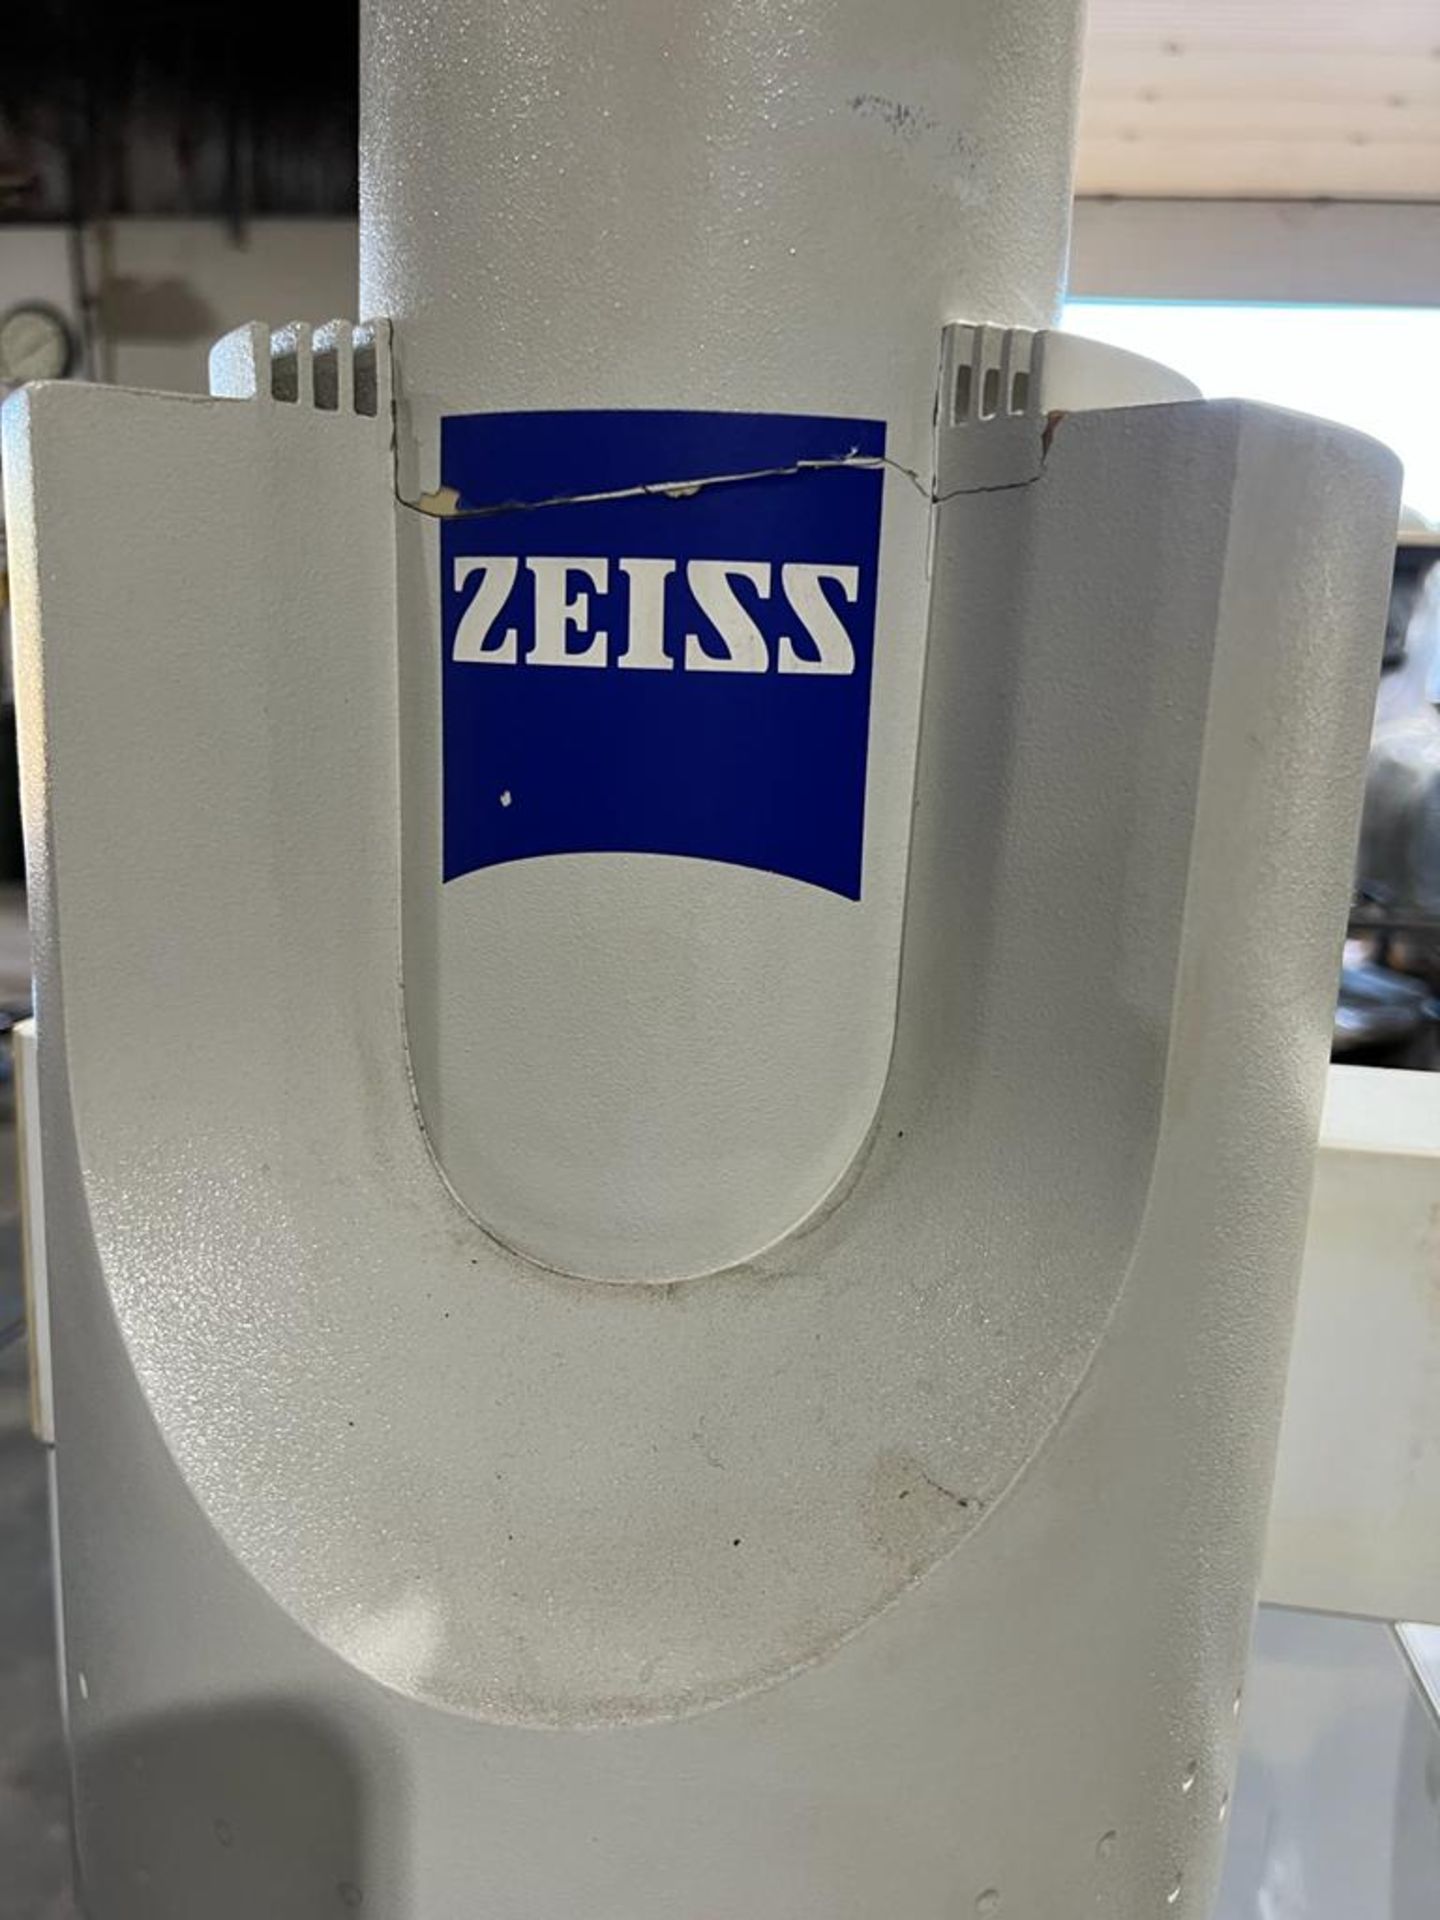 Carl Zeiss CMM model VISTA 1620-14 Coordinate Measurement Machine with MIP Renishaw Probe System & - Image 7 of 10